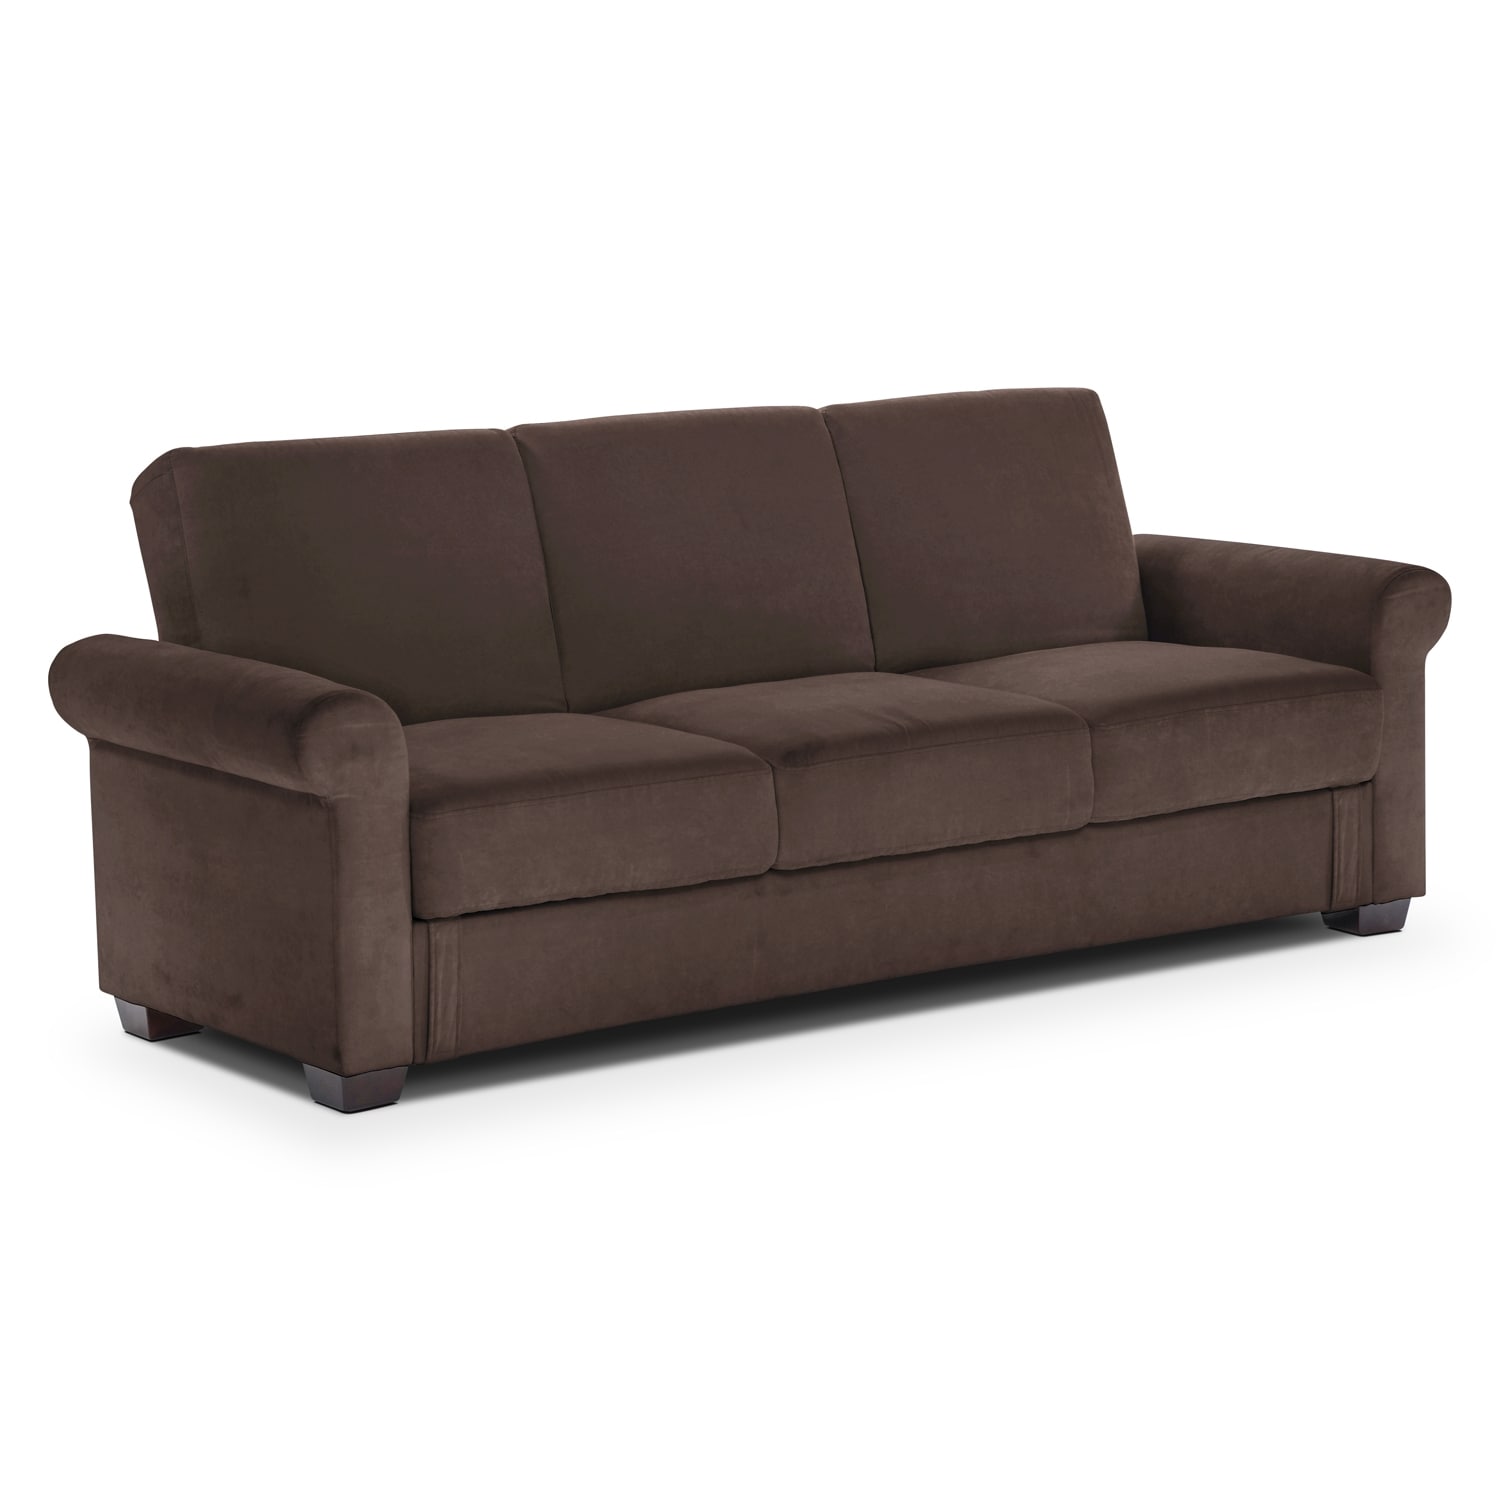 Thomas Futon Sofa Bed with Storage | American Signature Furniture